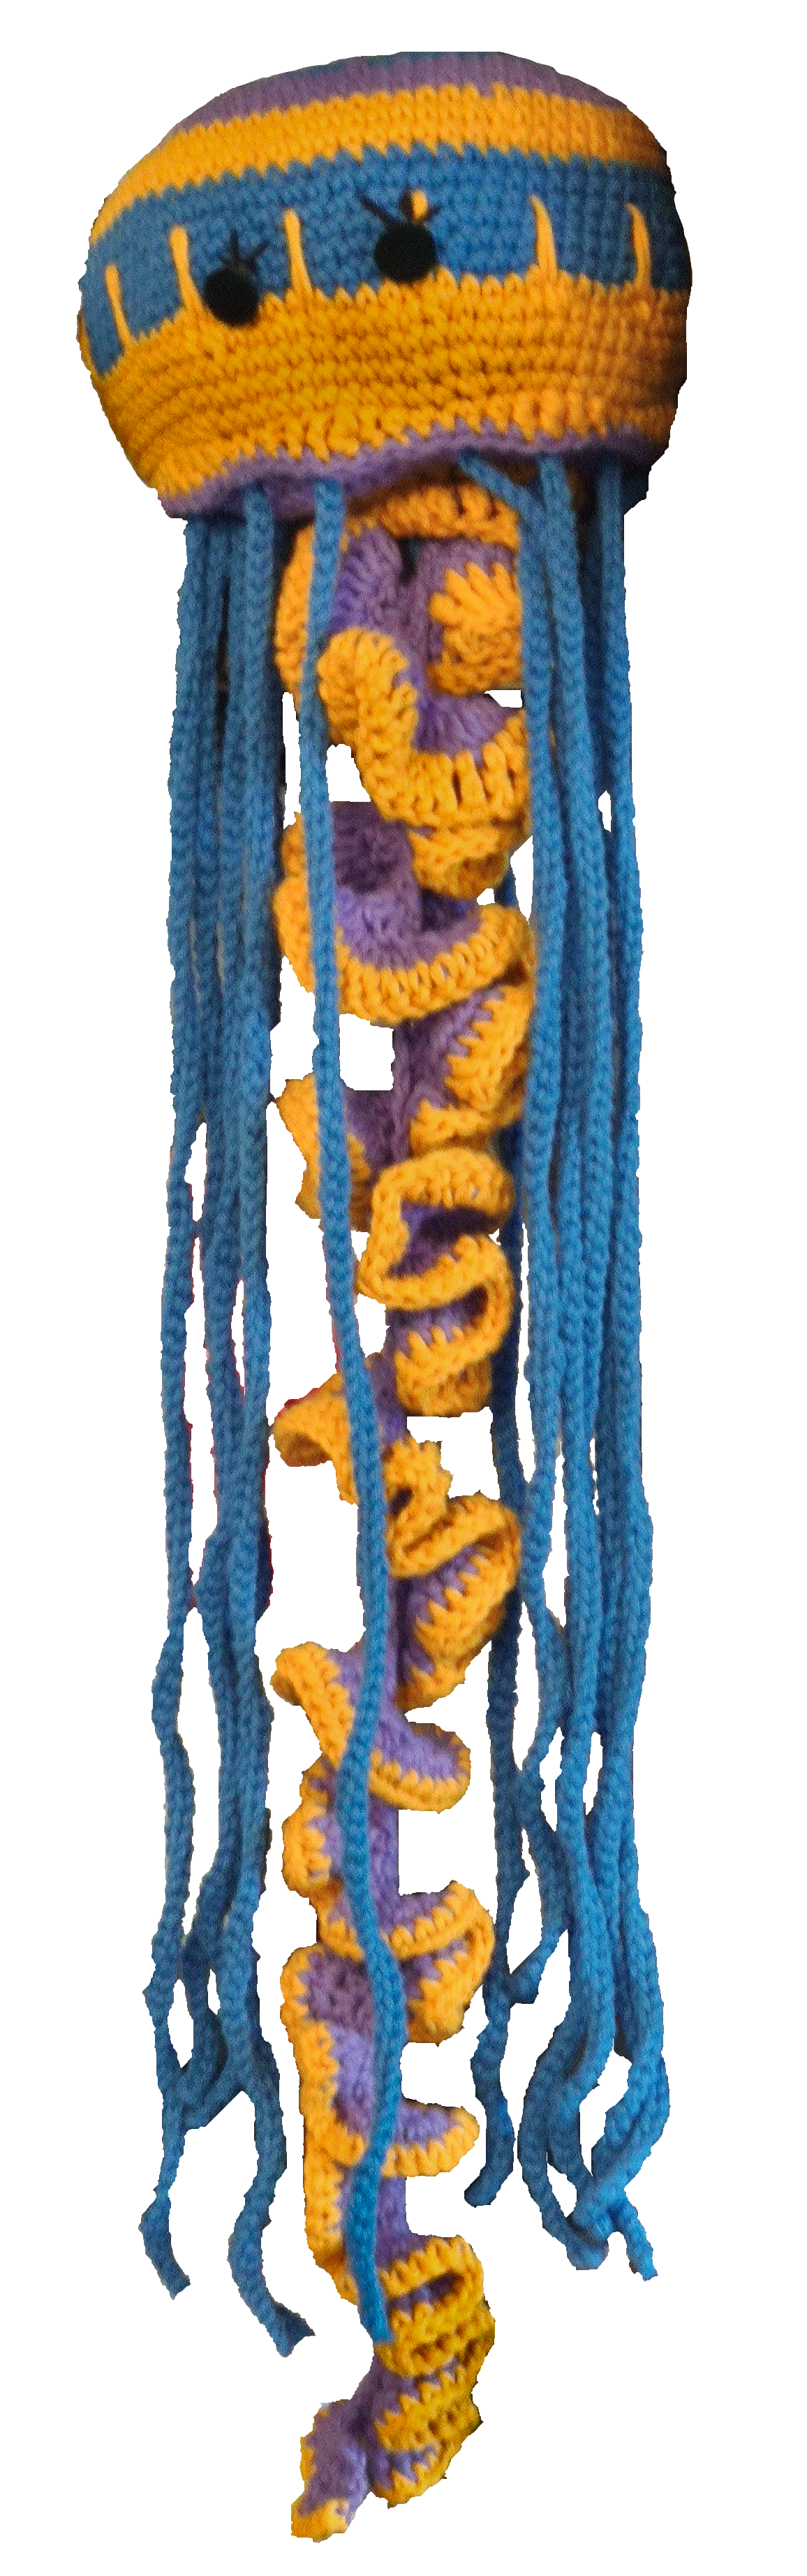 A crochet jellyfish